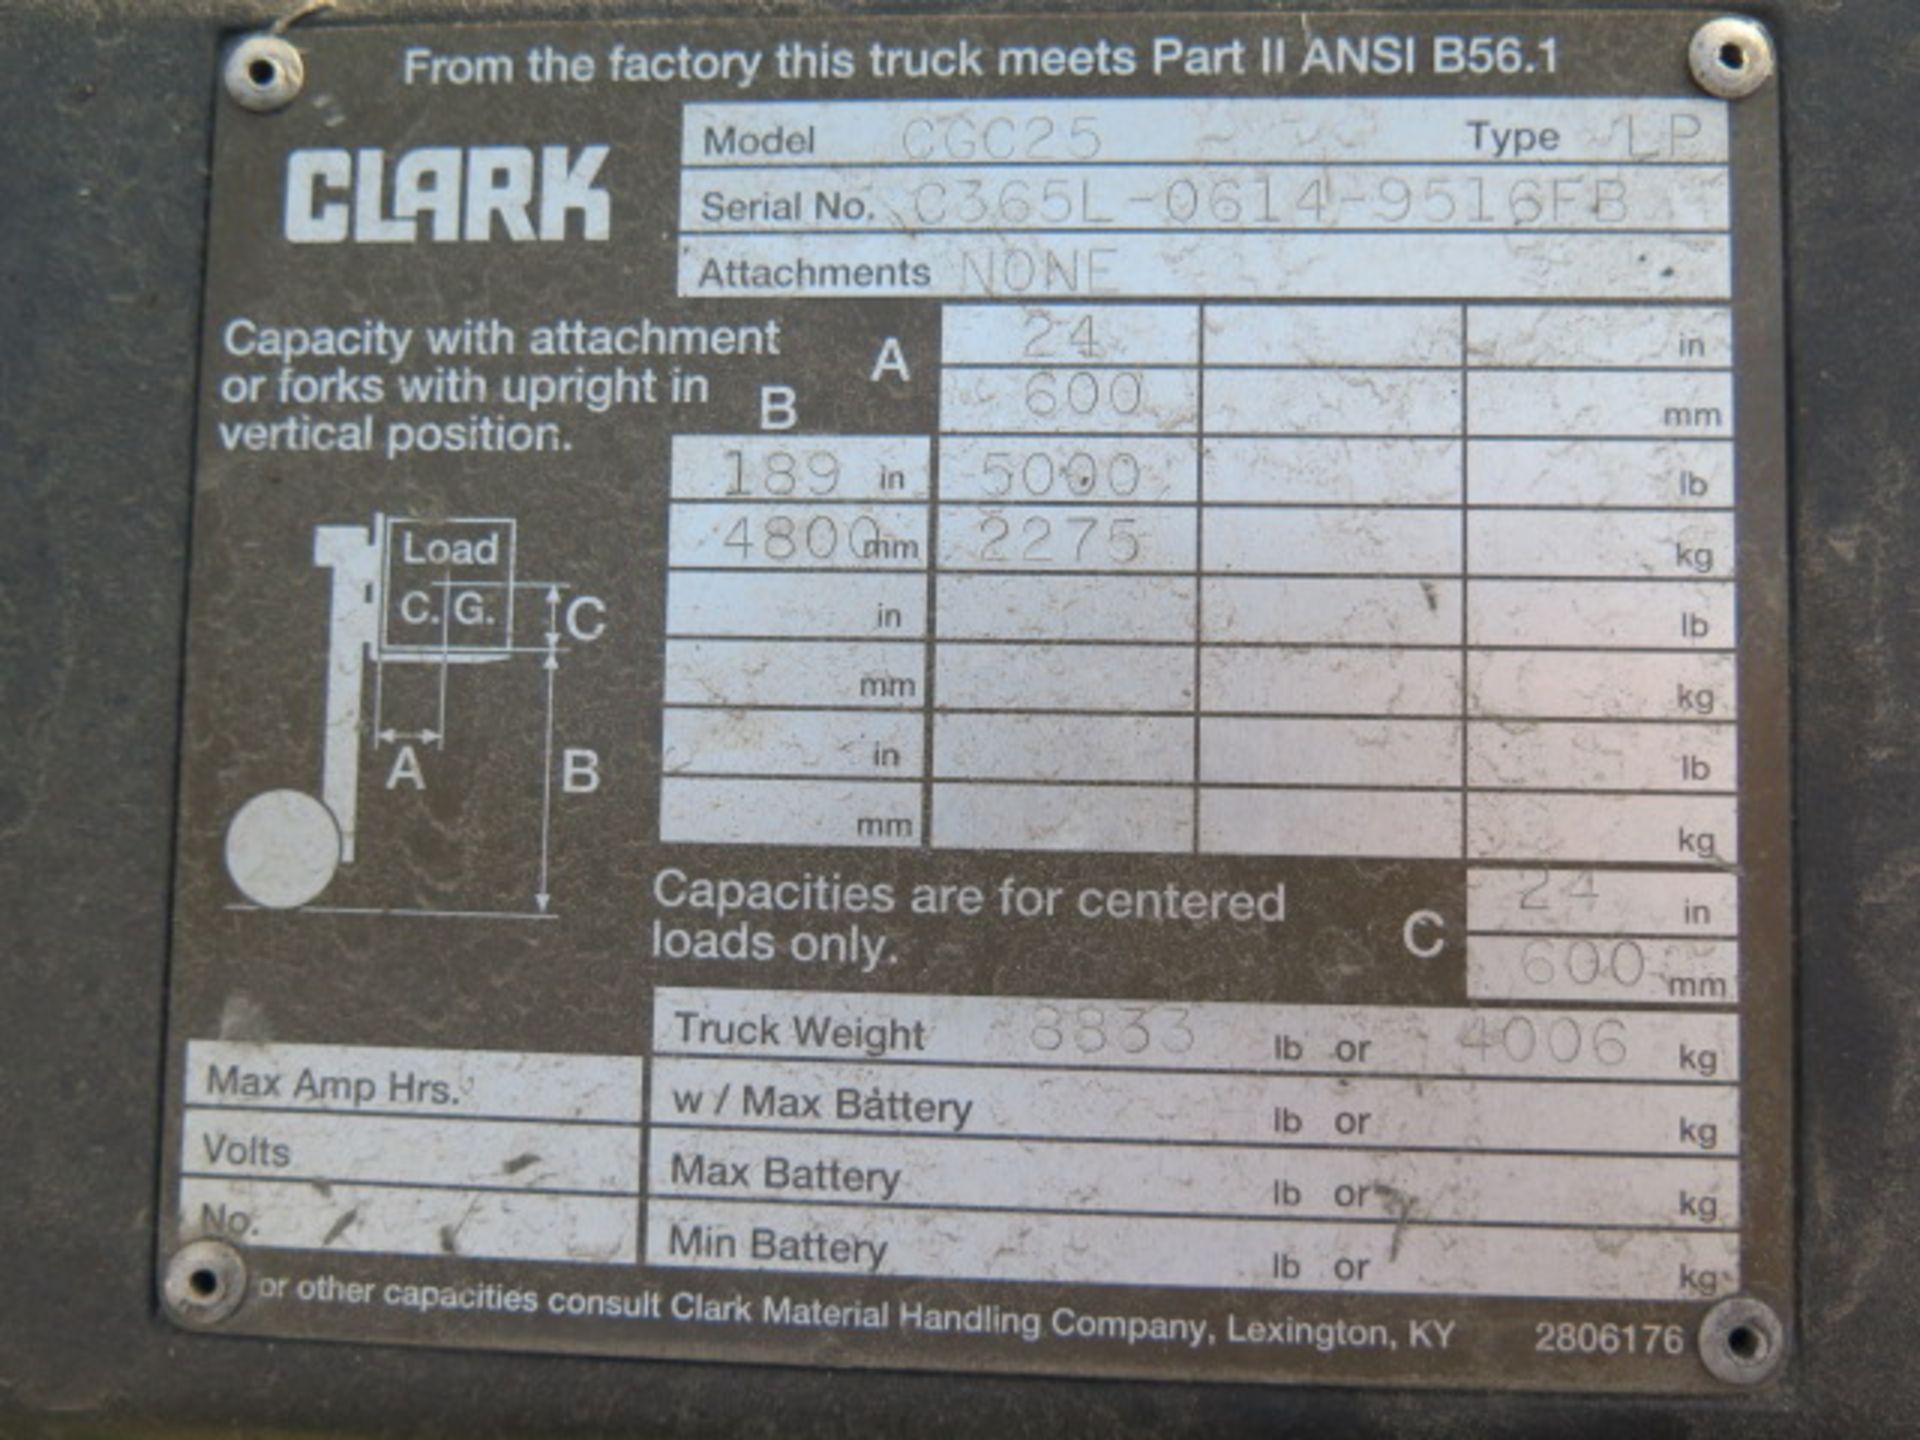 Clark CGC25 5000 Lb Cap LPG Forklift s/n C365L-0614-9516FB w/ 3-Stage Mast, 189” Lift Height, - Image 9 of 9